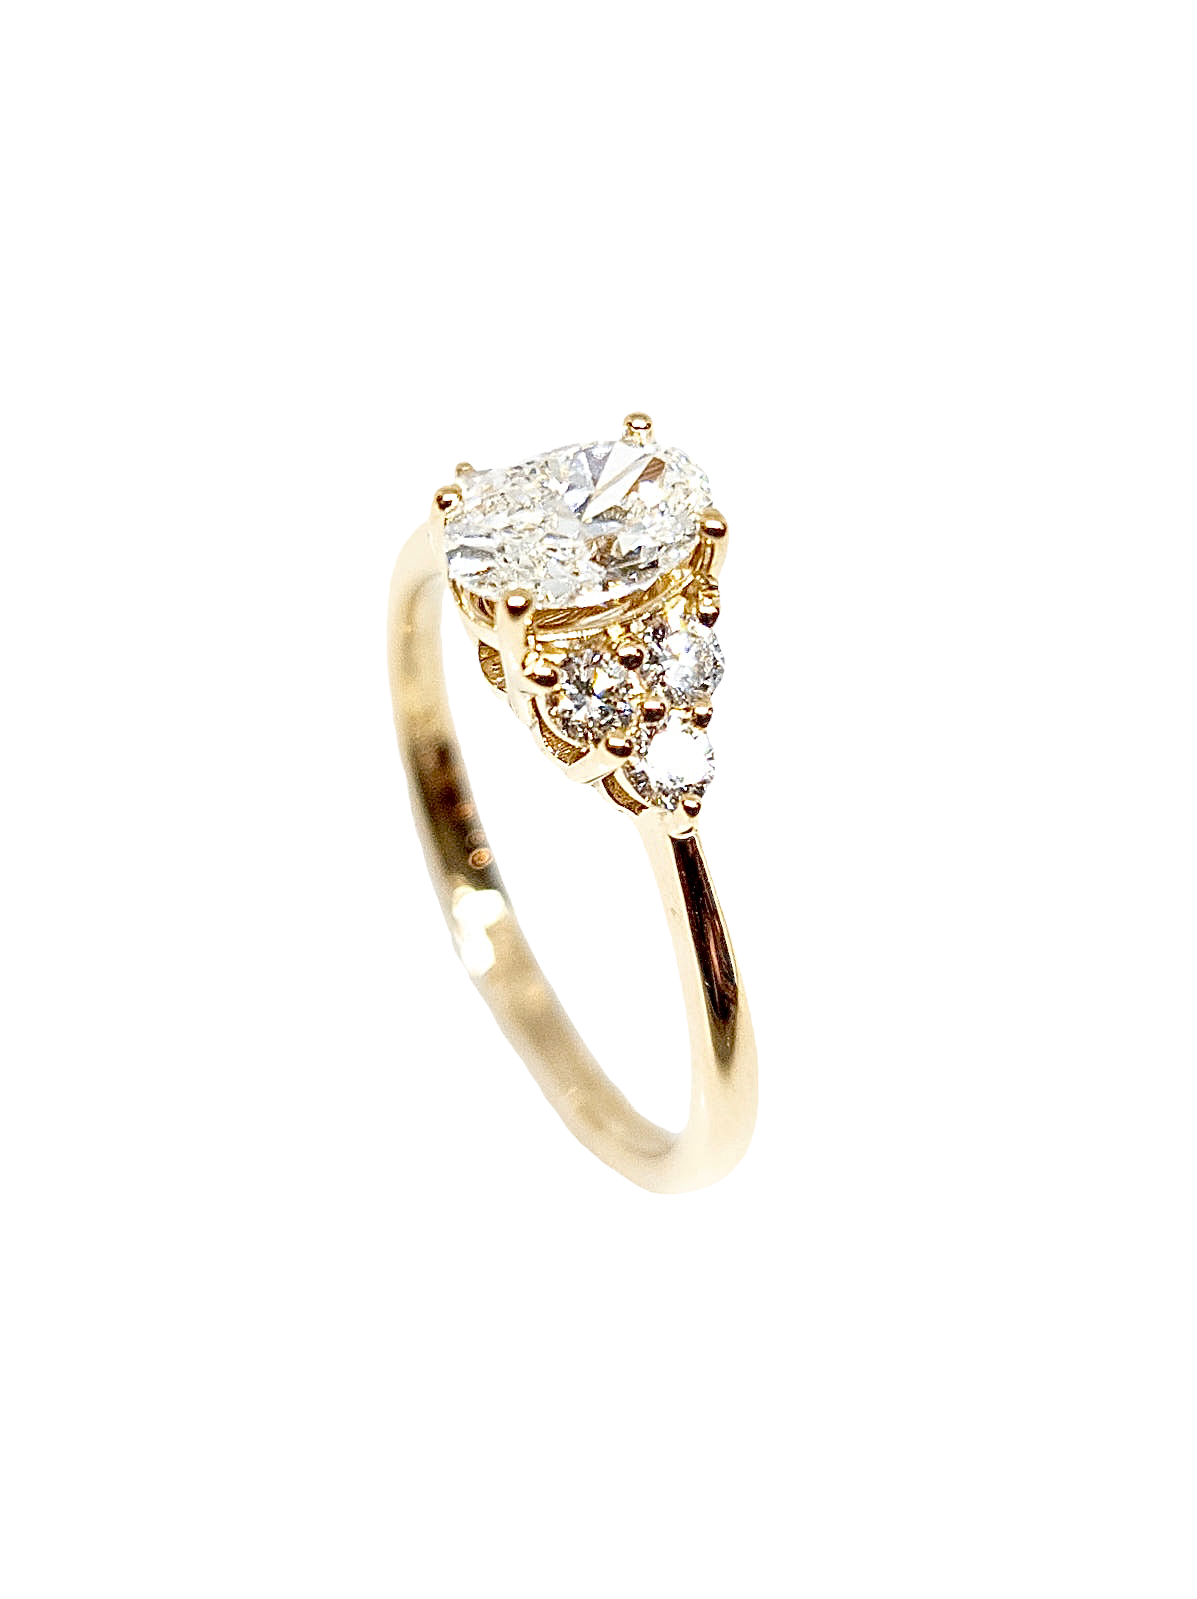 14K Yellow Gold 1.00cttw Engagement Diamond Ring